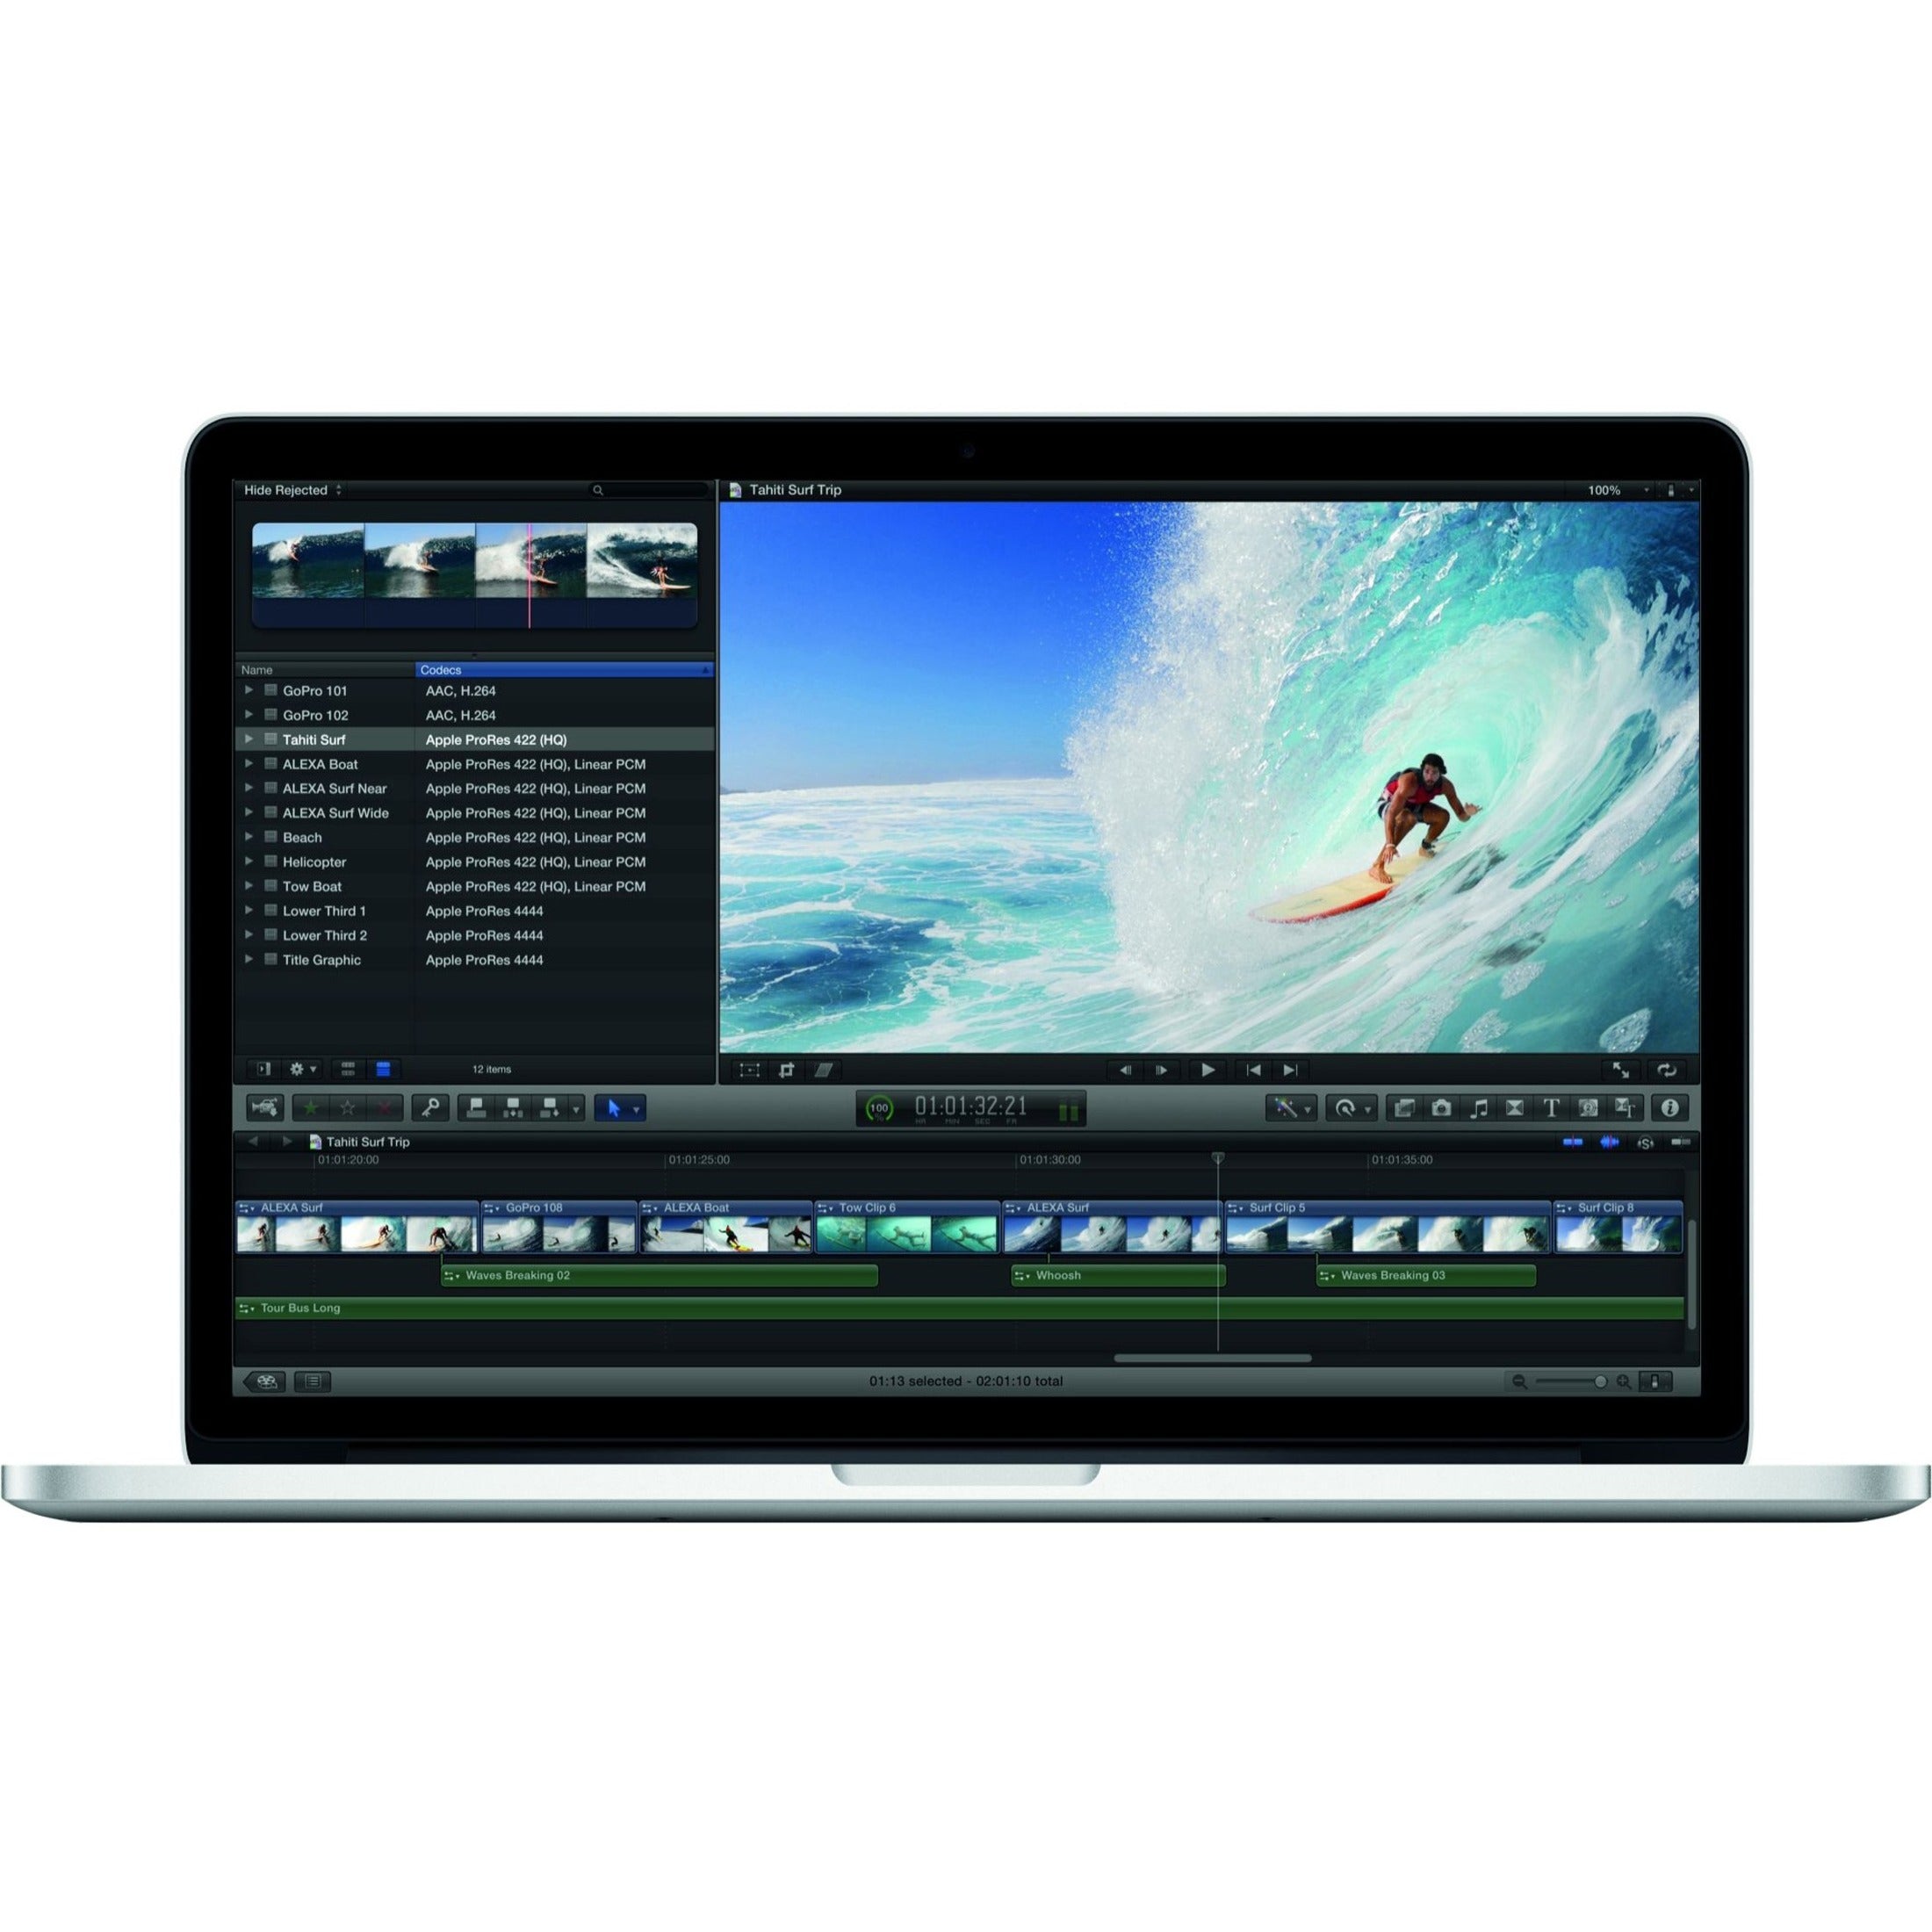 Apple MGX72LL/A MacBook Pro 13.3 Notebook Computer with Retina Display, 8GB RAM, 128GB SSD, OS X Mavericks